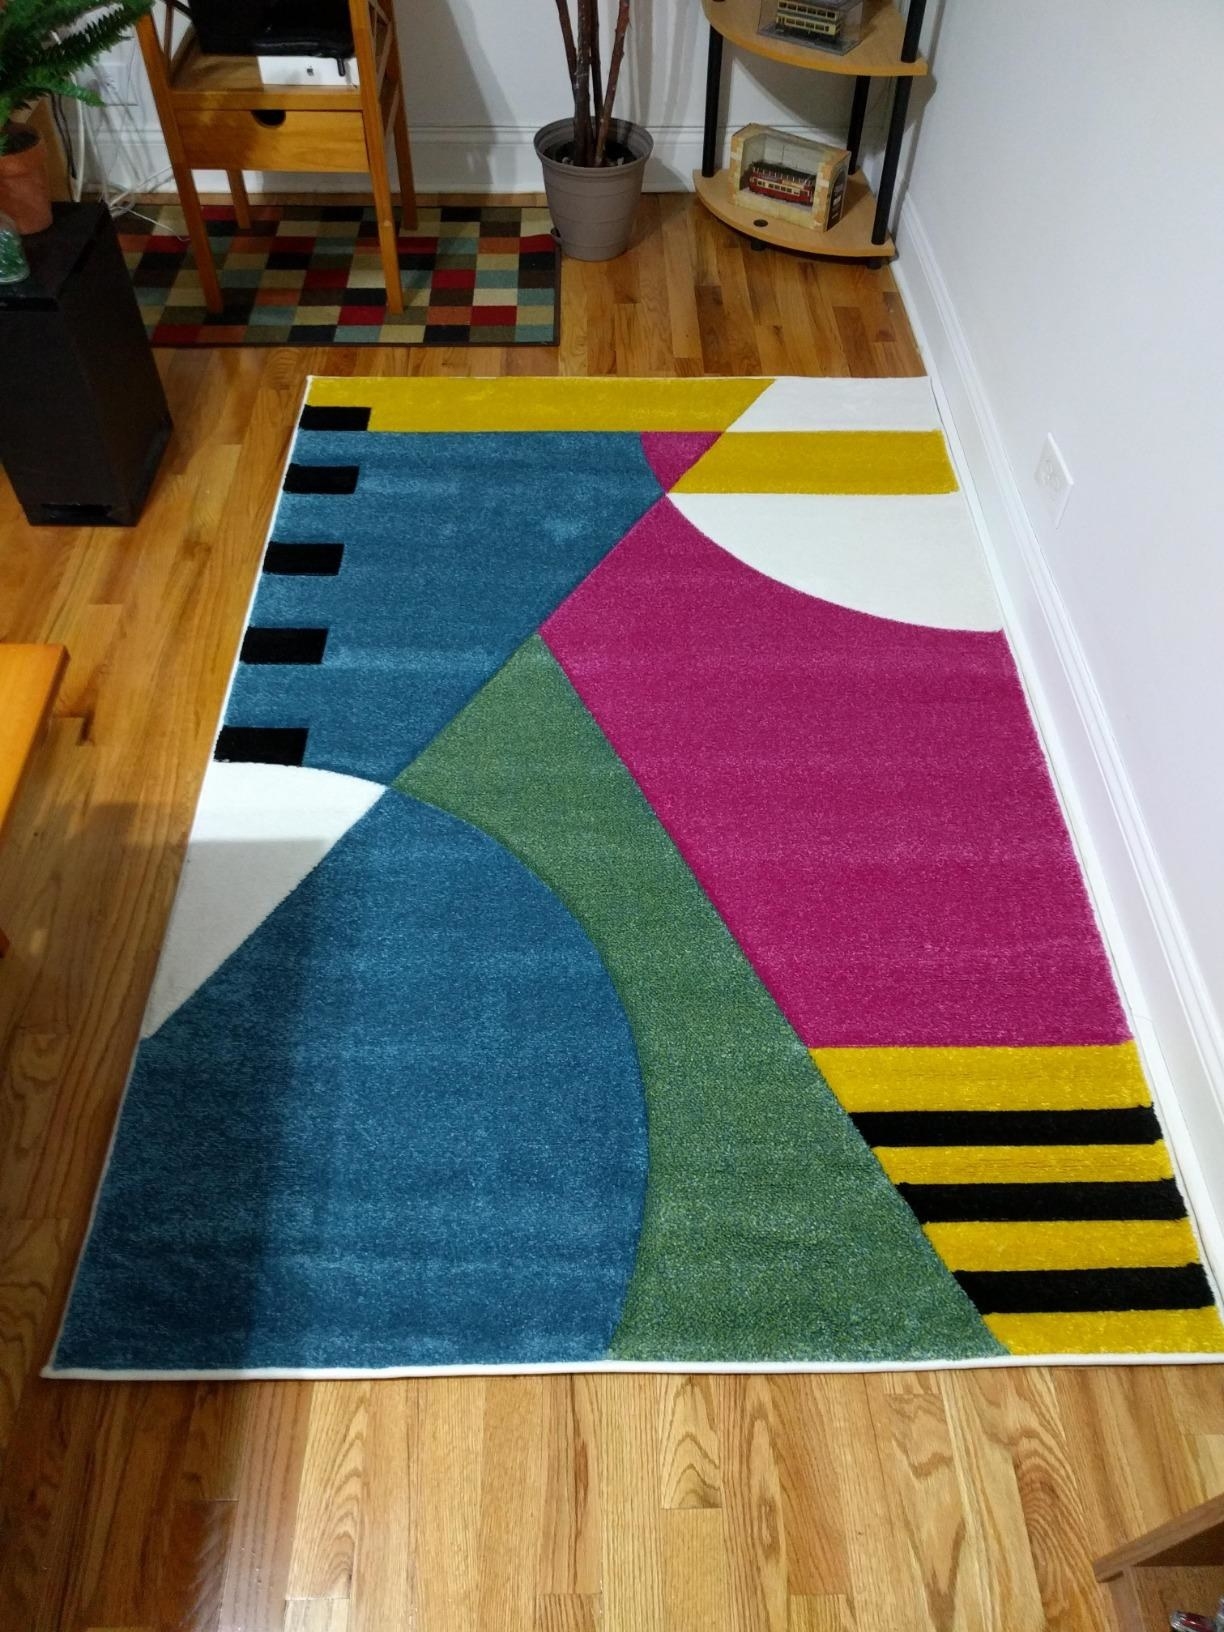 colorful area rug on hardwood floor